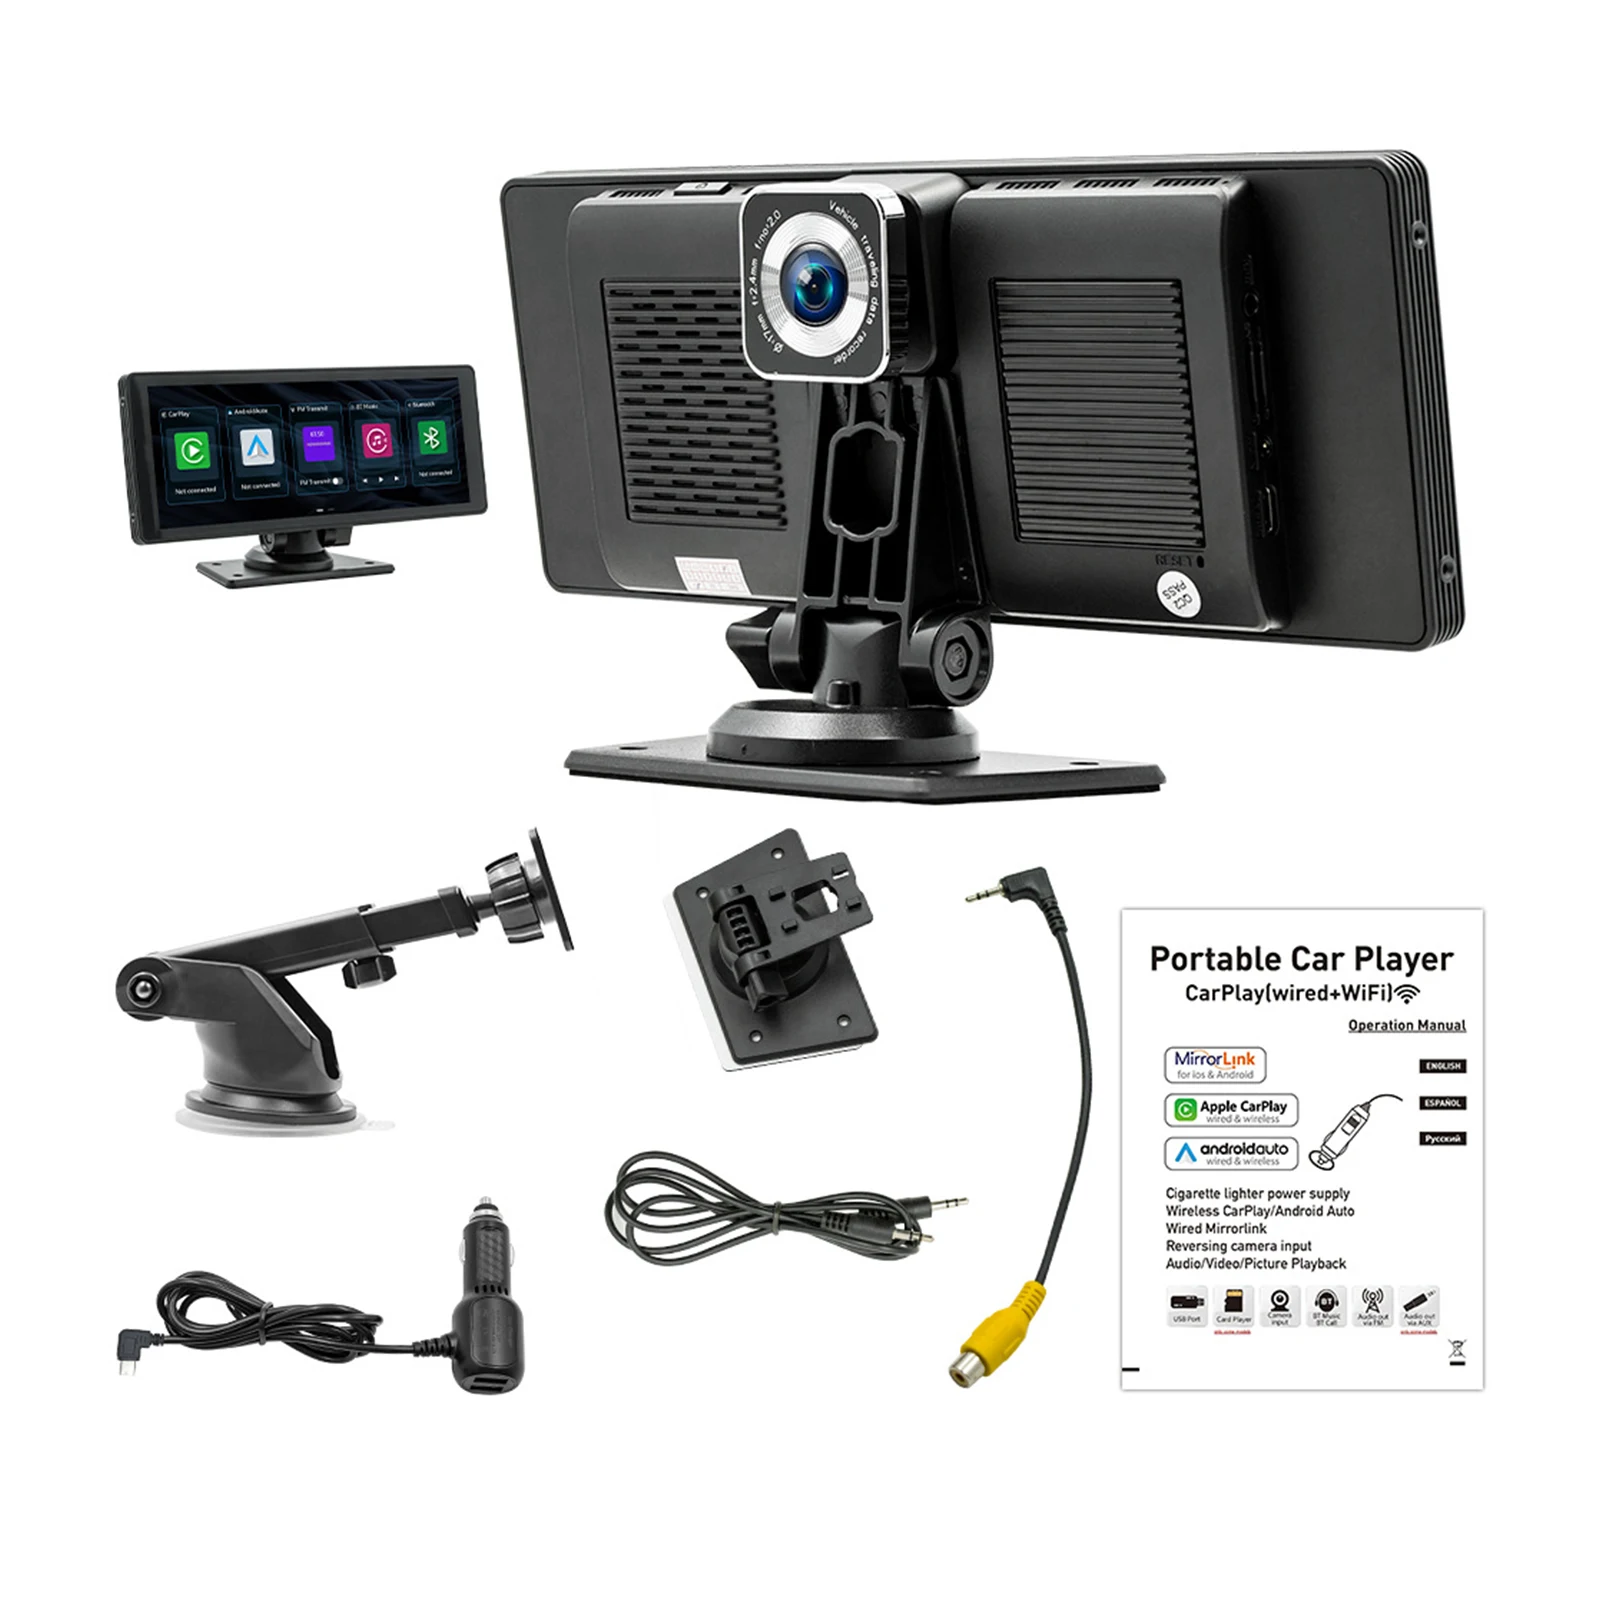 pantalla-de-coche-con-vista-trasera-inversa-y-grabadora-hd-bluetooth-portatil-reproductor-de-coche